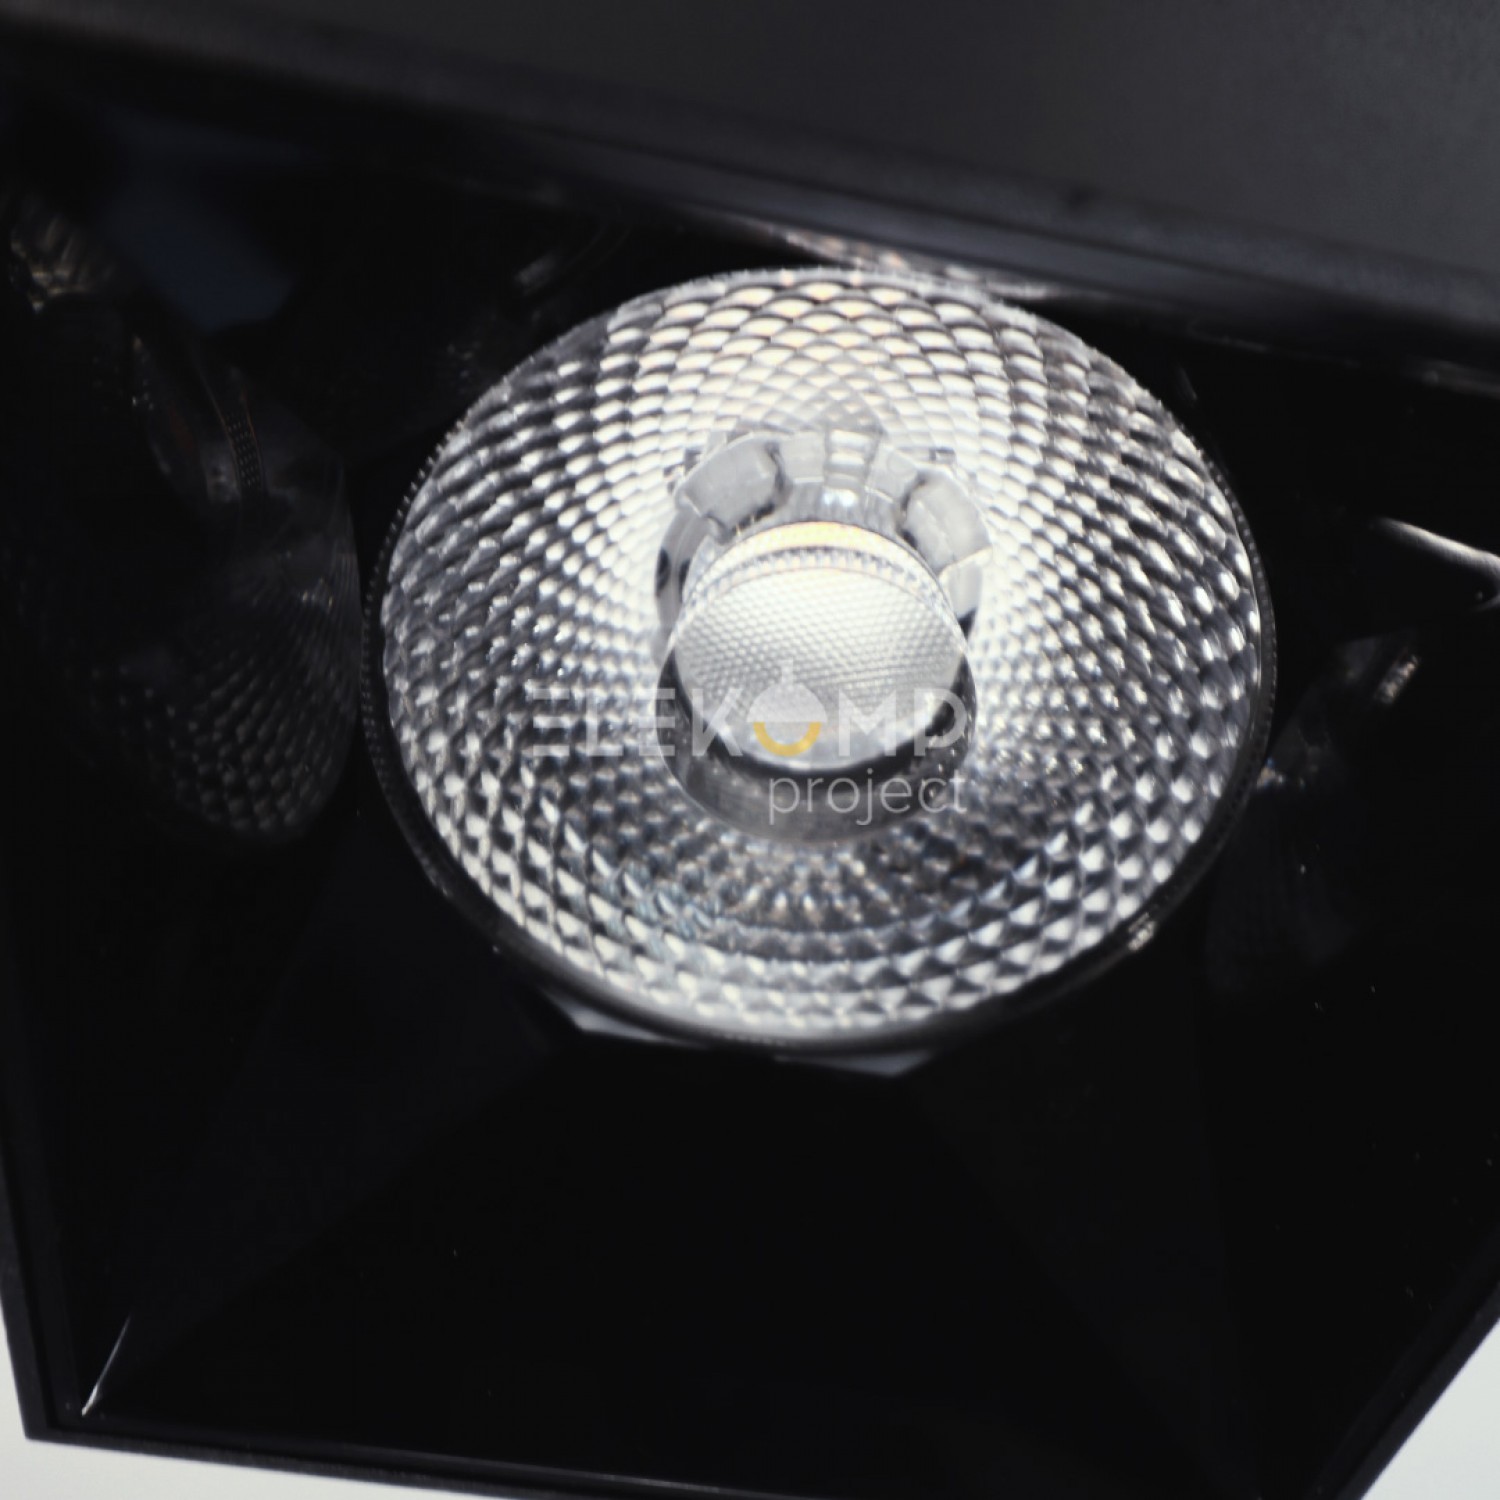 Точечный светильник Elekomp Pro Tube Architectural 18w SQ Premium 246762